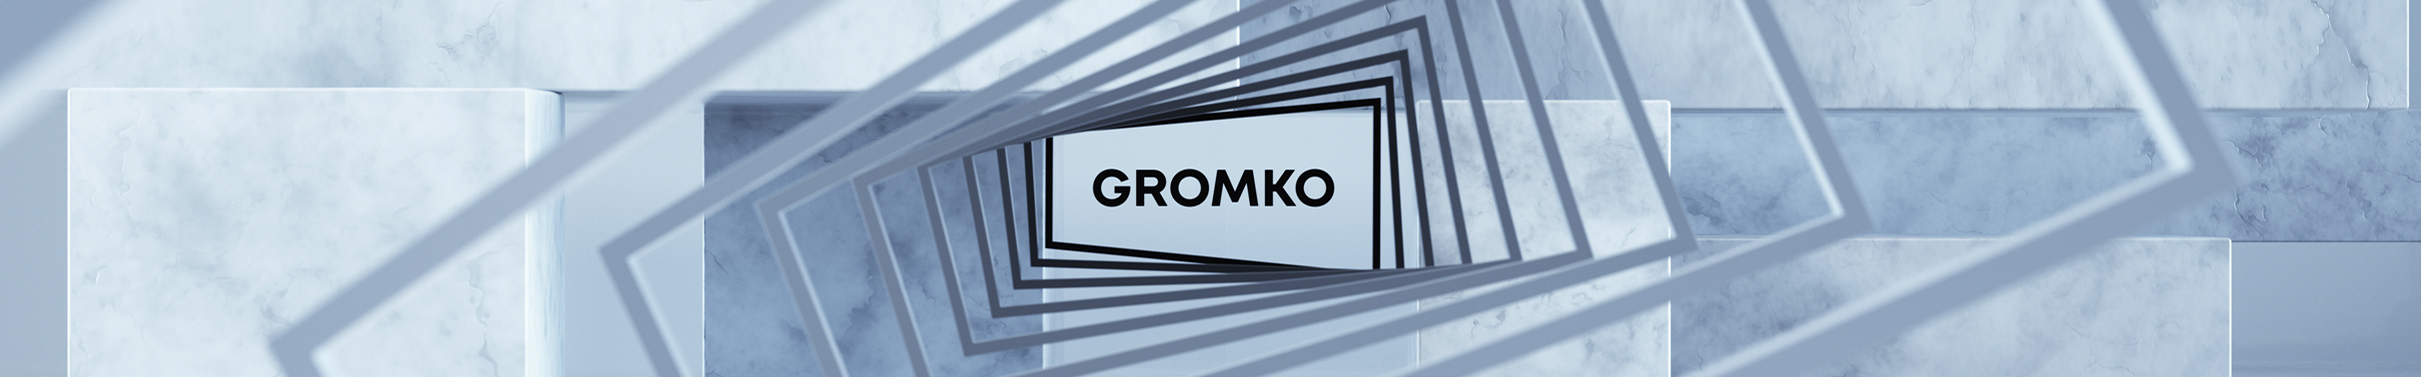 Ivan Gromko's profile banner